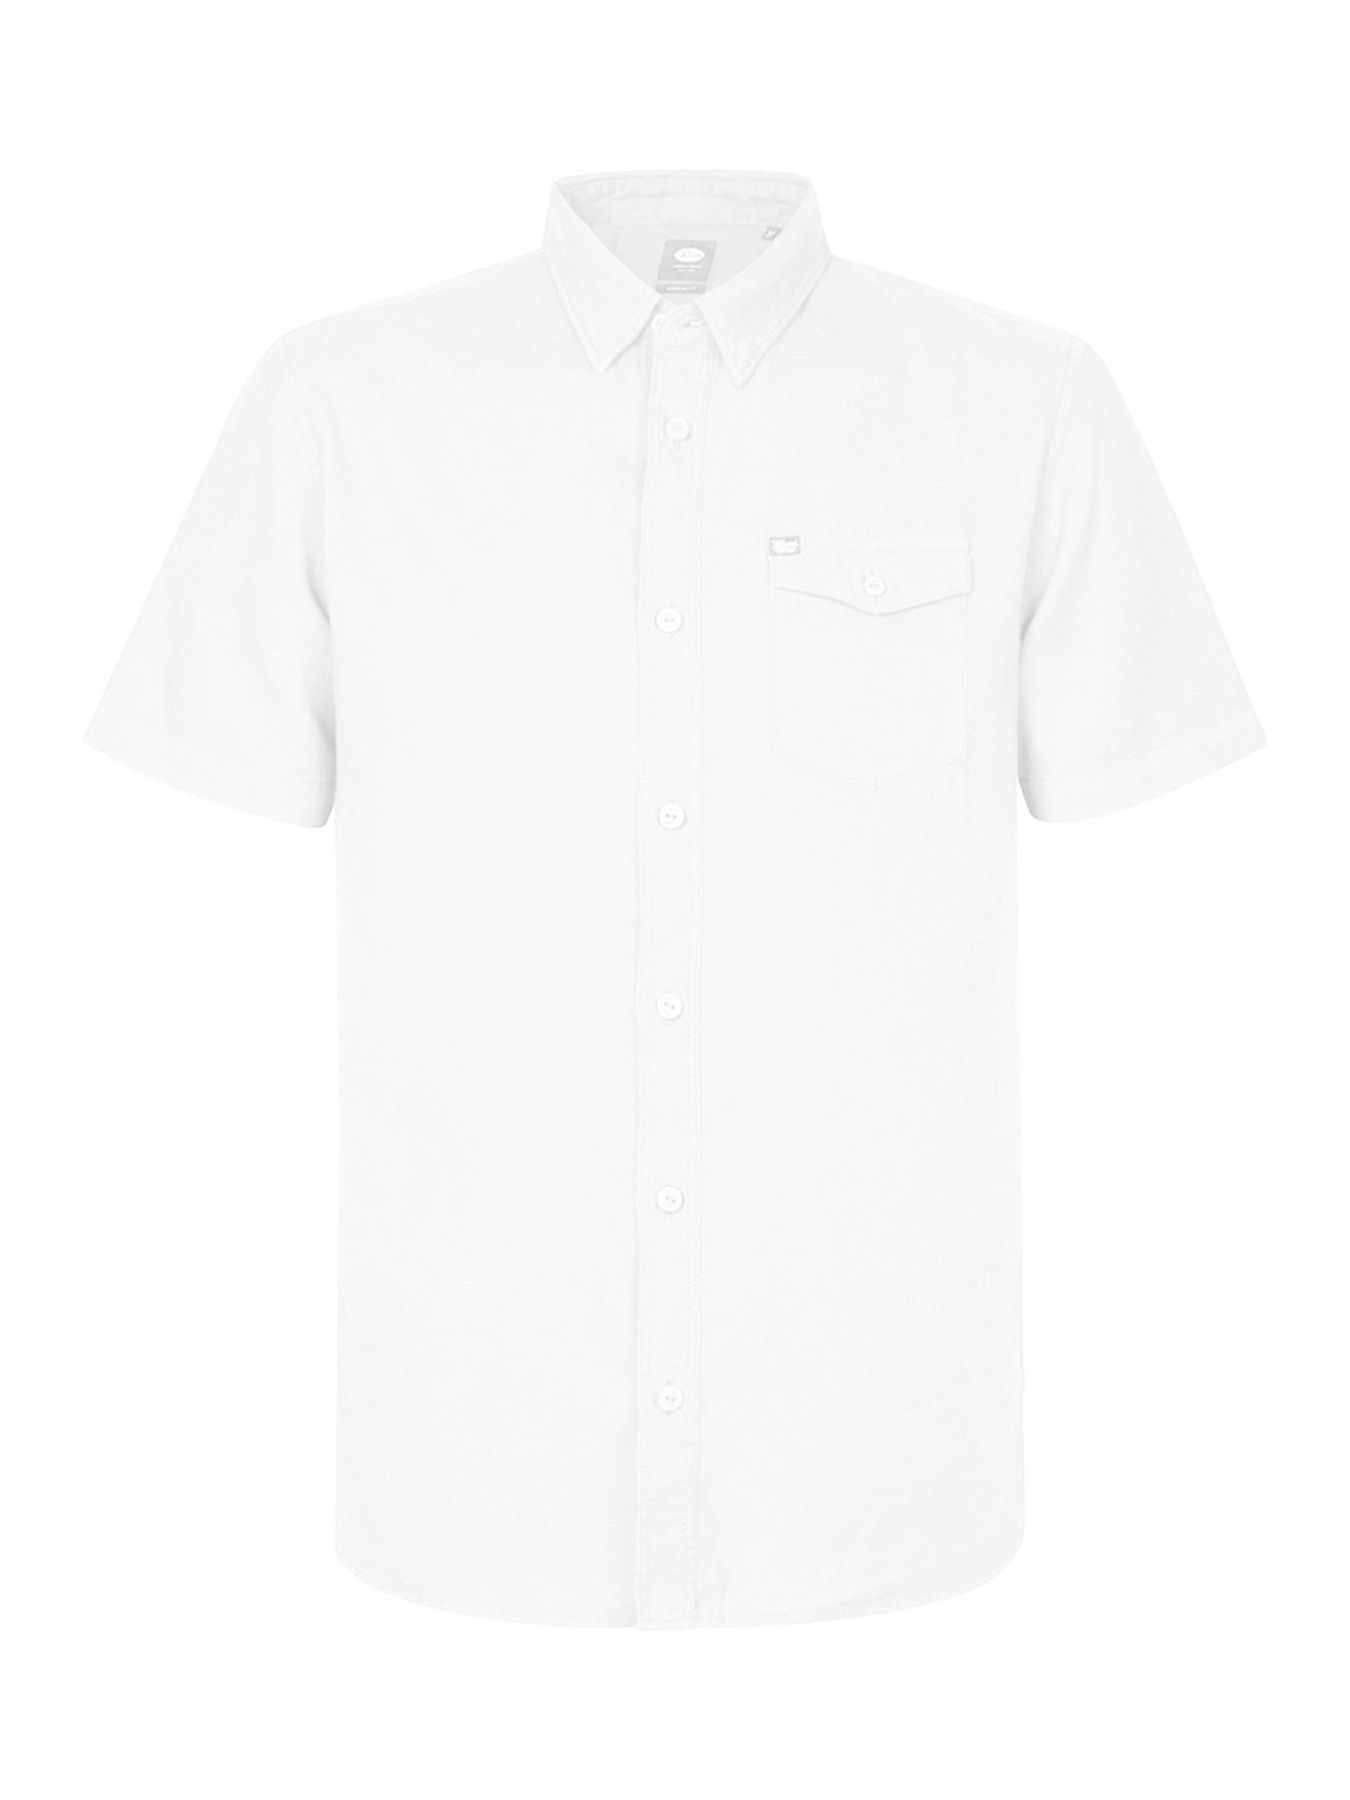 Petrol Industries Men Shirt Short Sleeve Uni Bright White0000 2900144371043